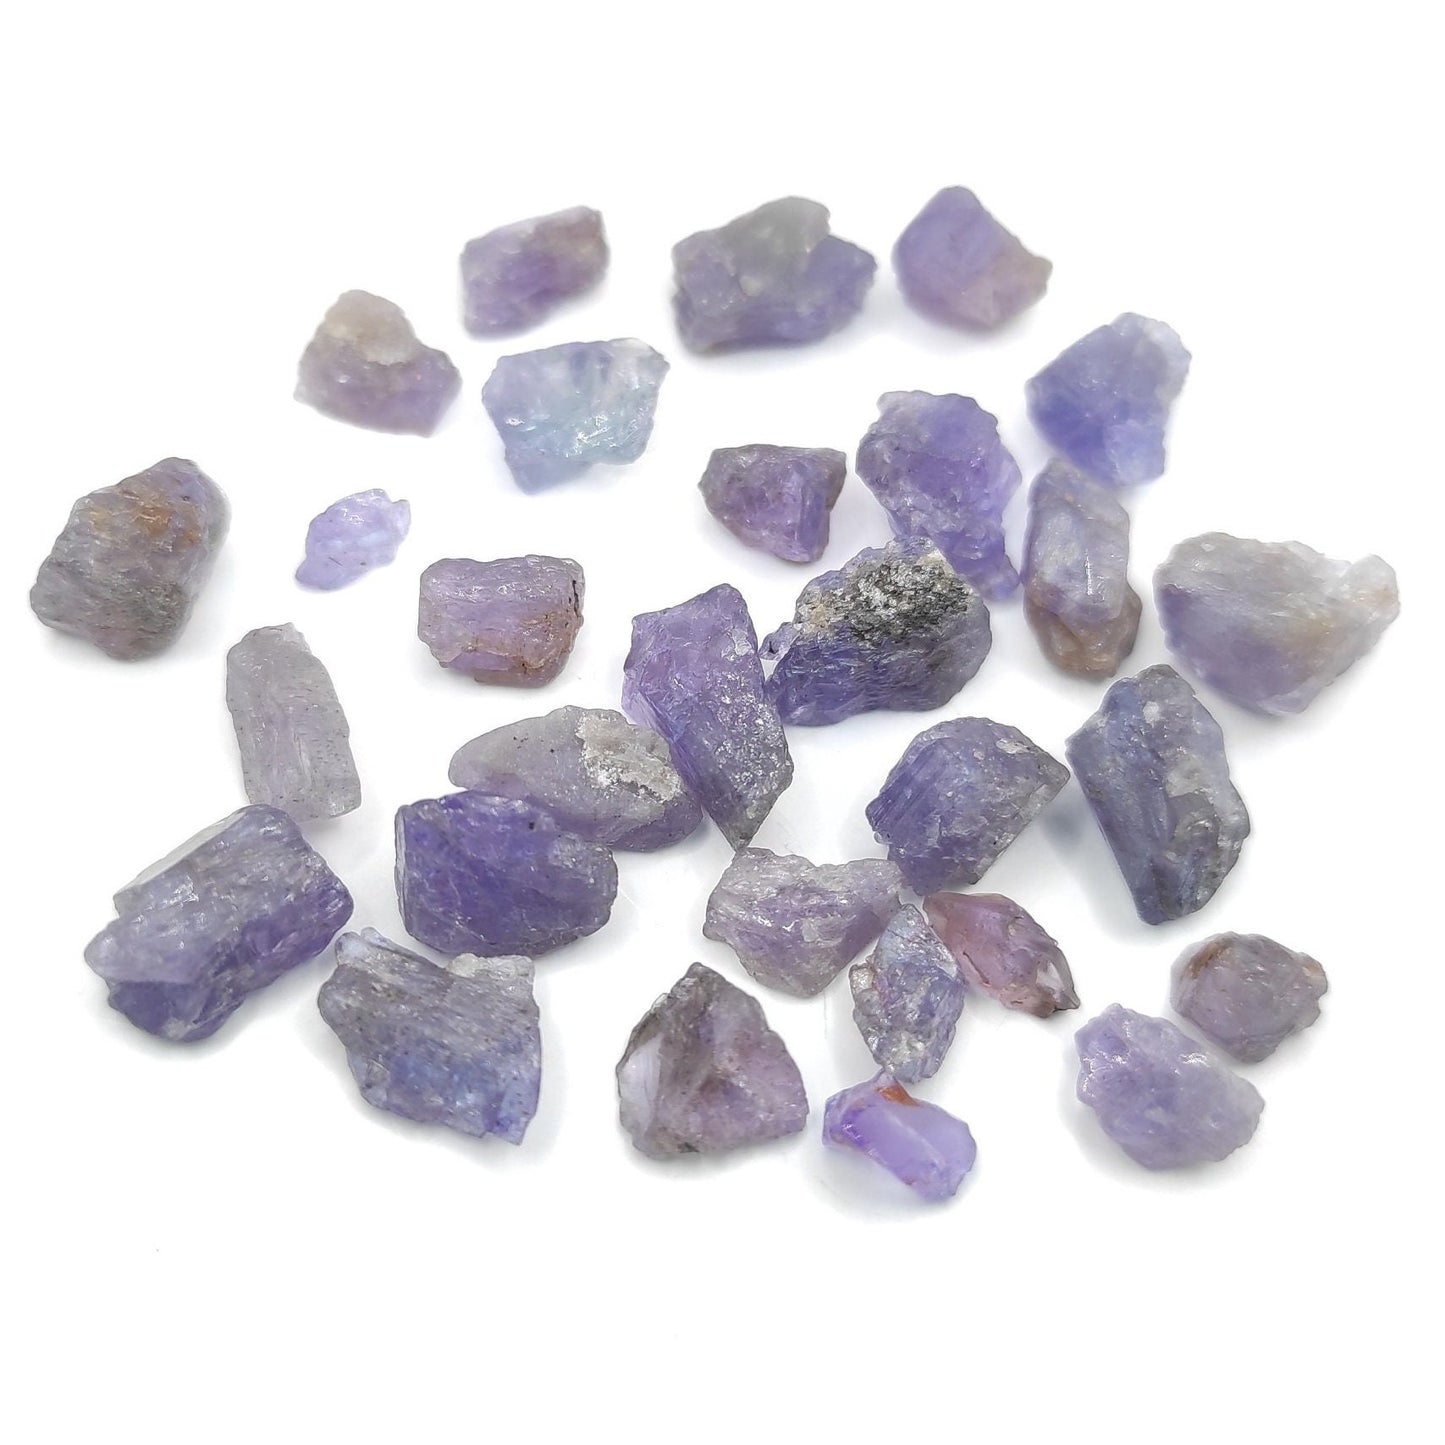 55ct Lot of 29pcs - Raw Tanzanite Gemstones - Rough Tanzanite Crystals - Heat Treated Tanzanite Loose Gems - Purple Tanzanite from Tanzania